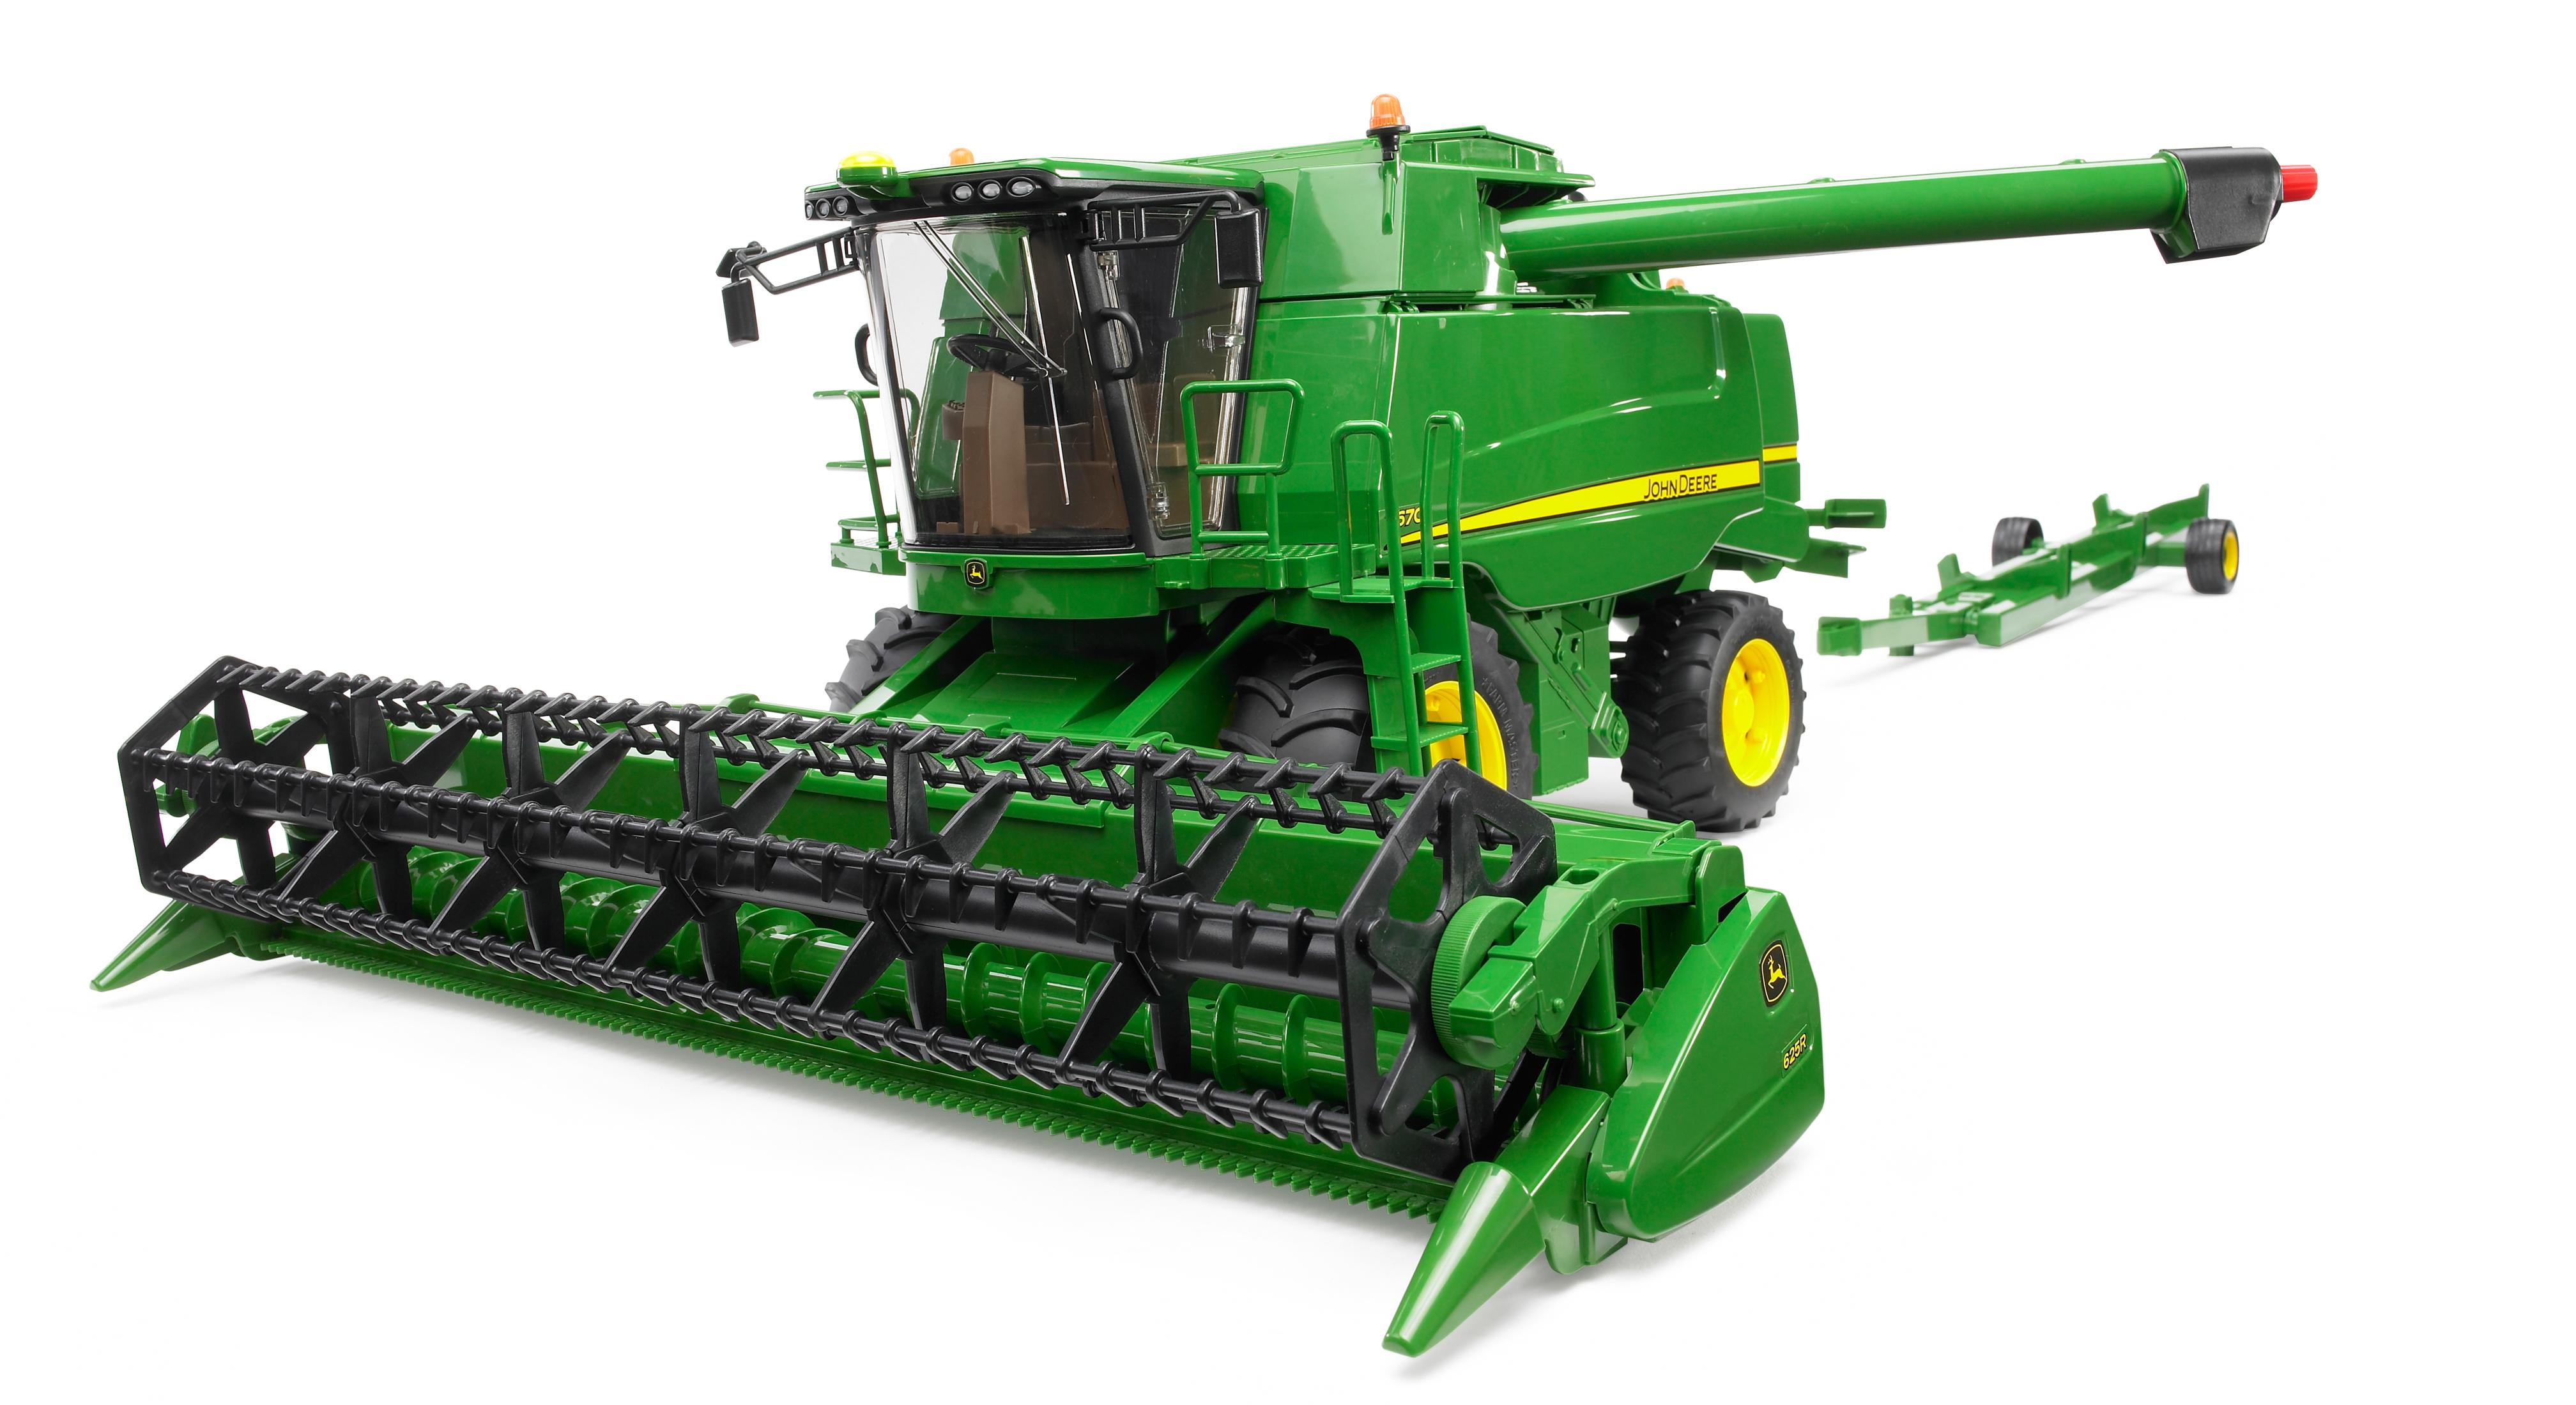 Amazon.com: Bruder John Deere T670i Combine Harvester: Toys & Games